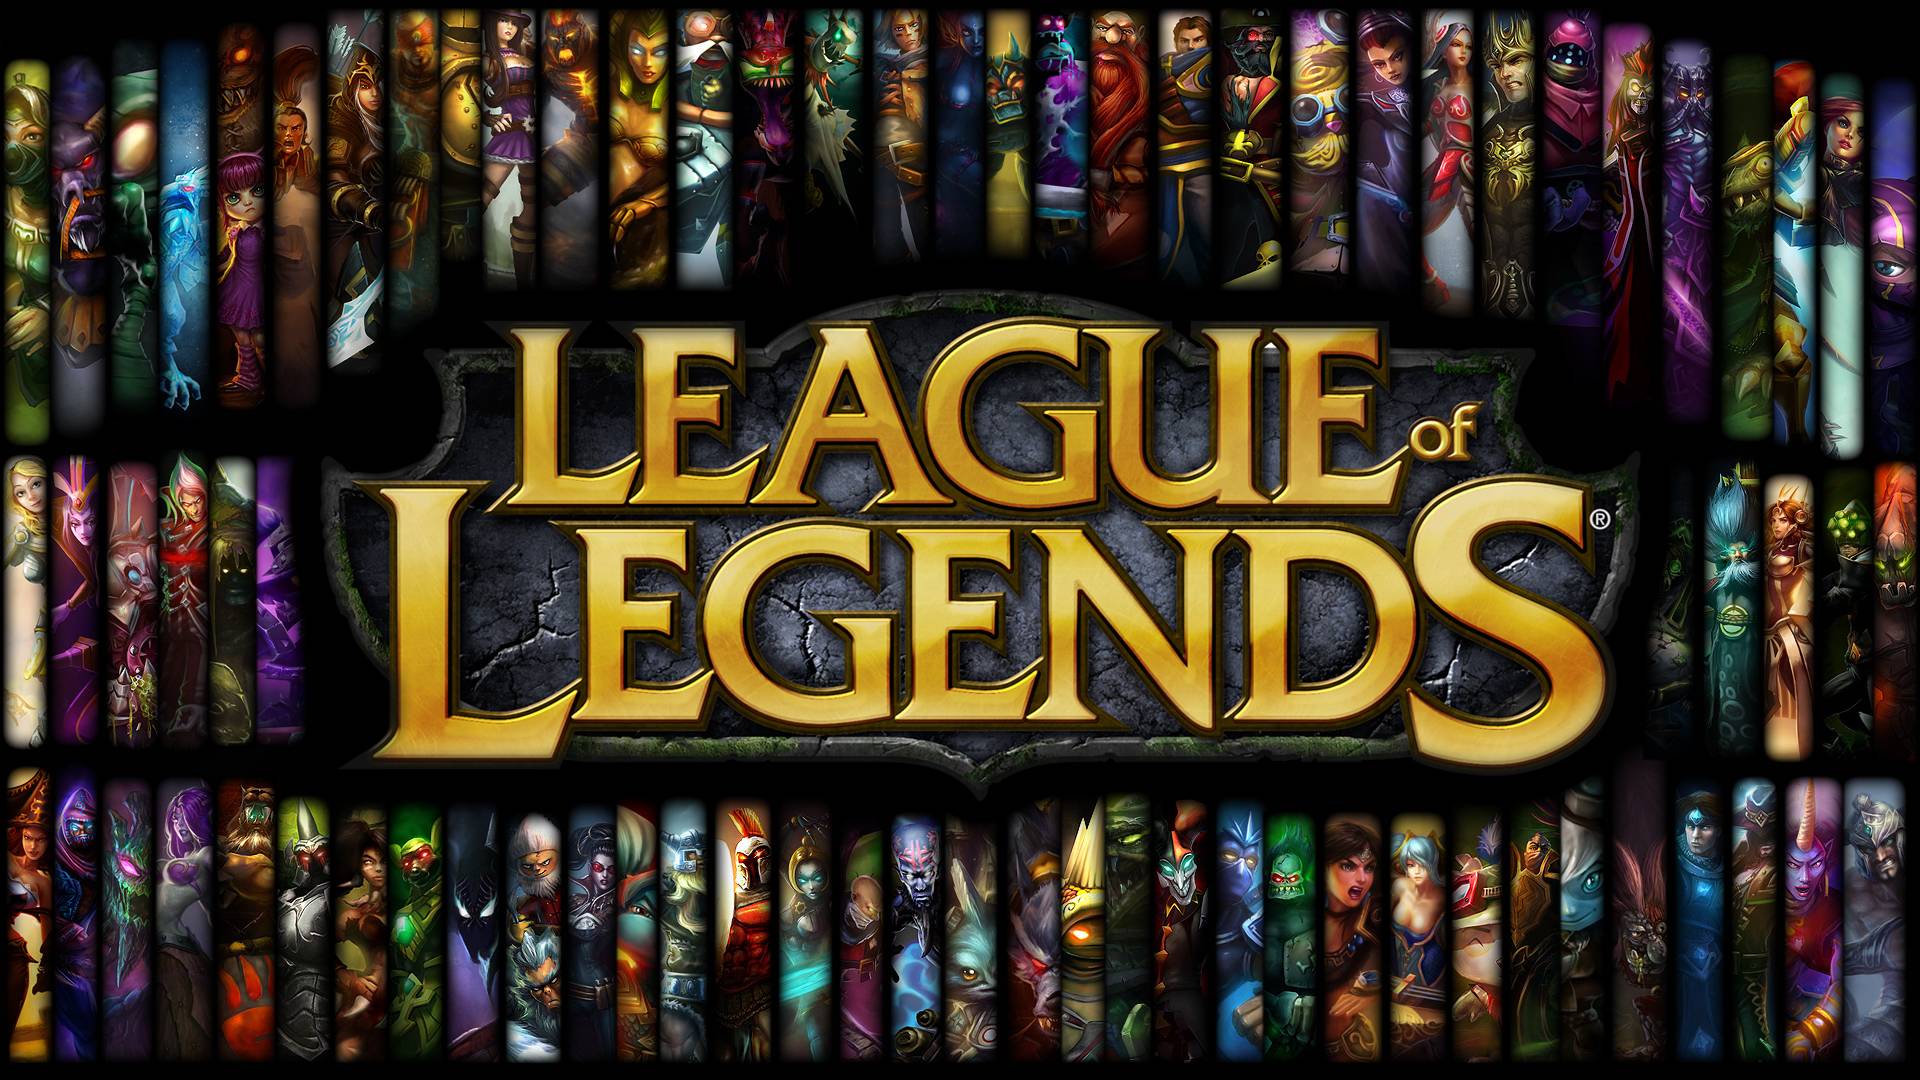 League of Legends Wallpaper 251882 Image HD Wallpaper. Wallfoy.com